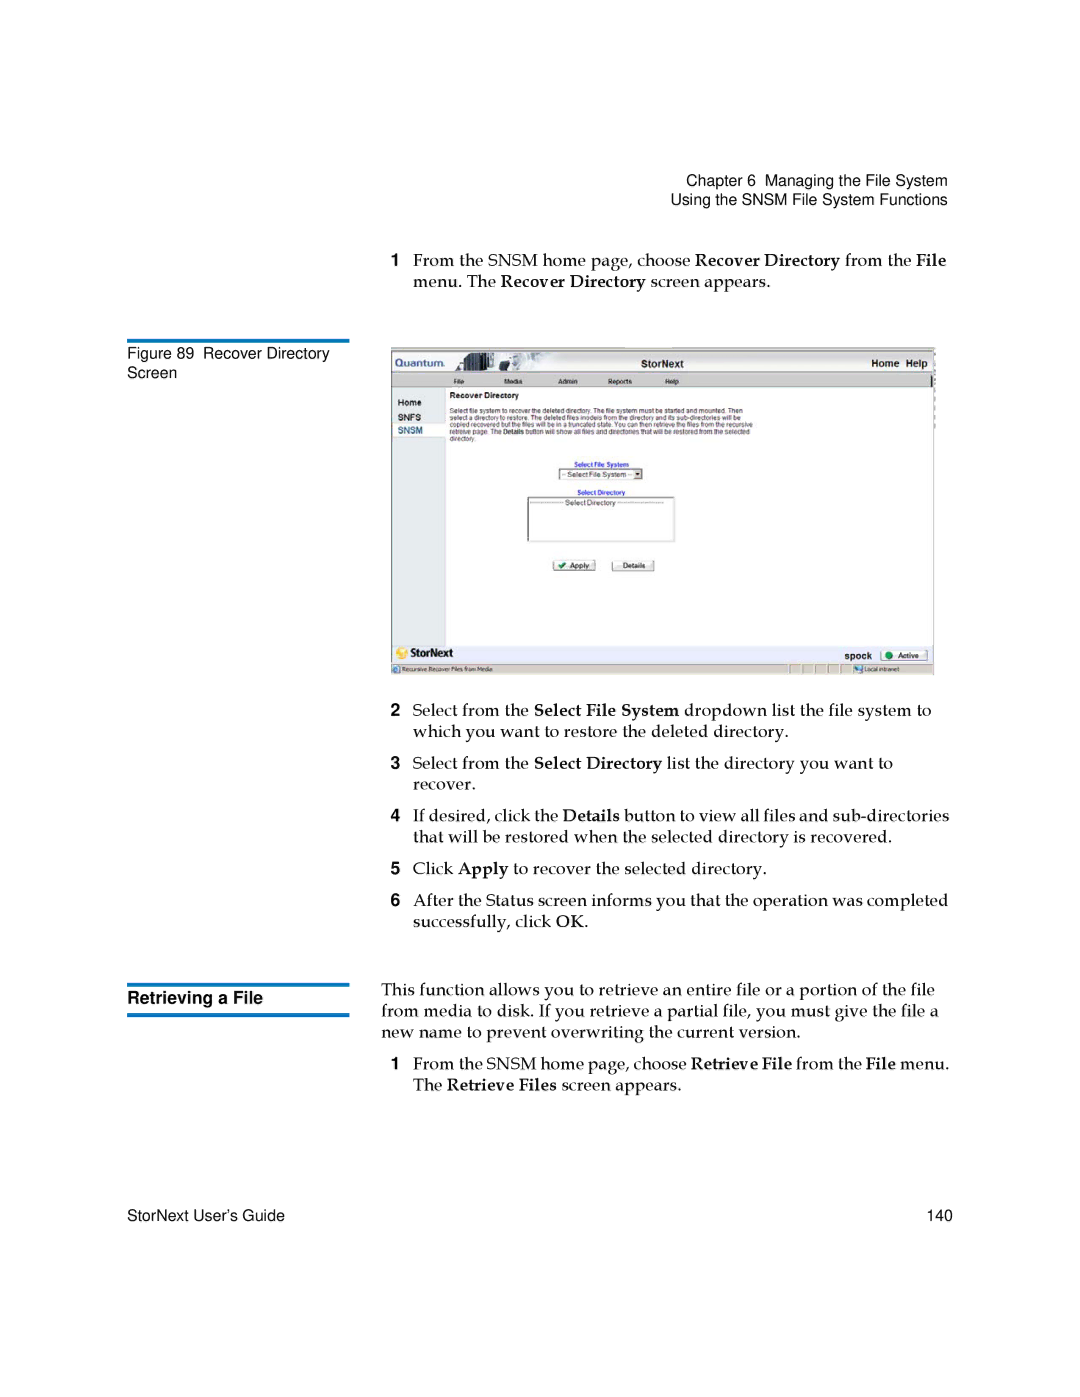 Quantum 3.5.1 manual Retrieving a File, Recover Directory Screen 